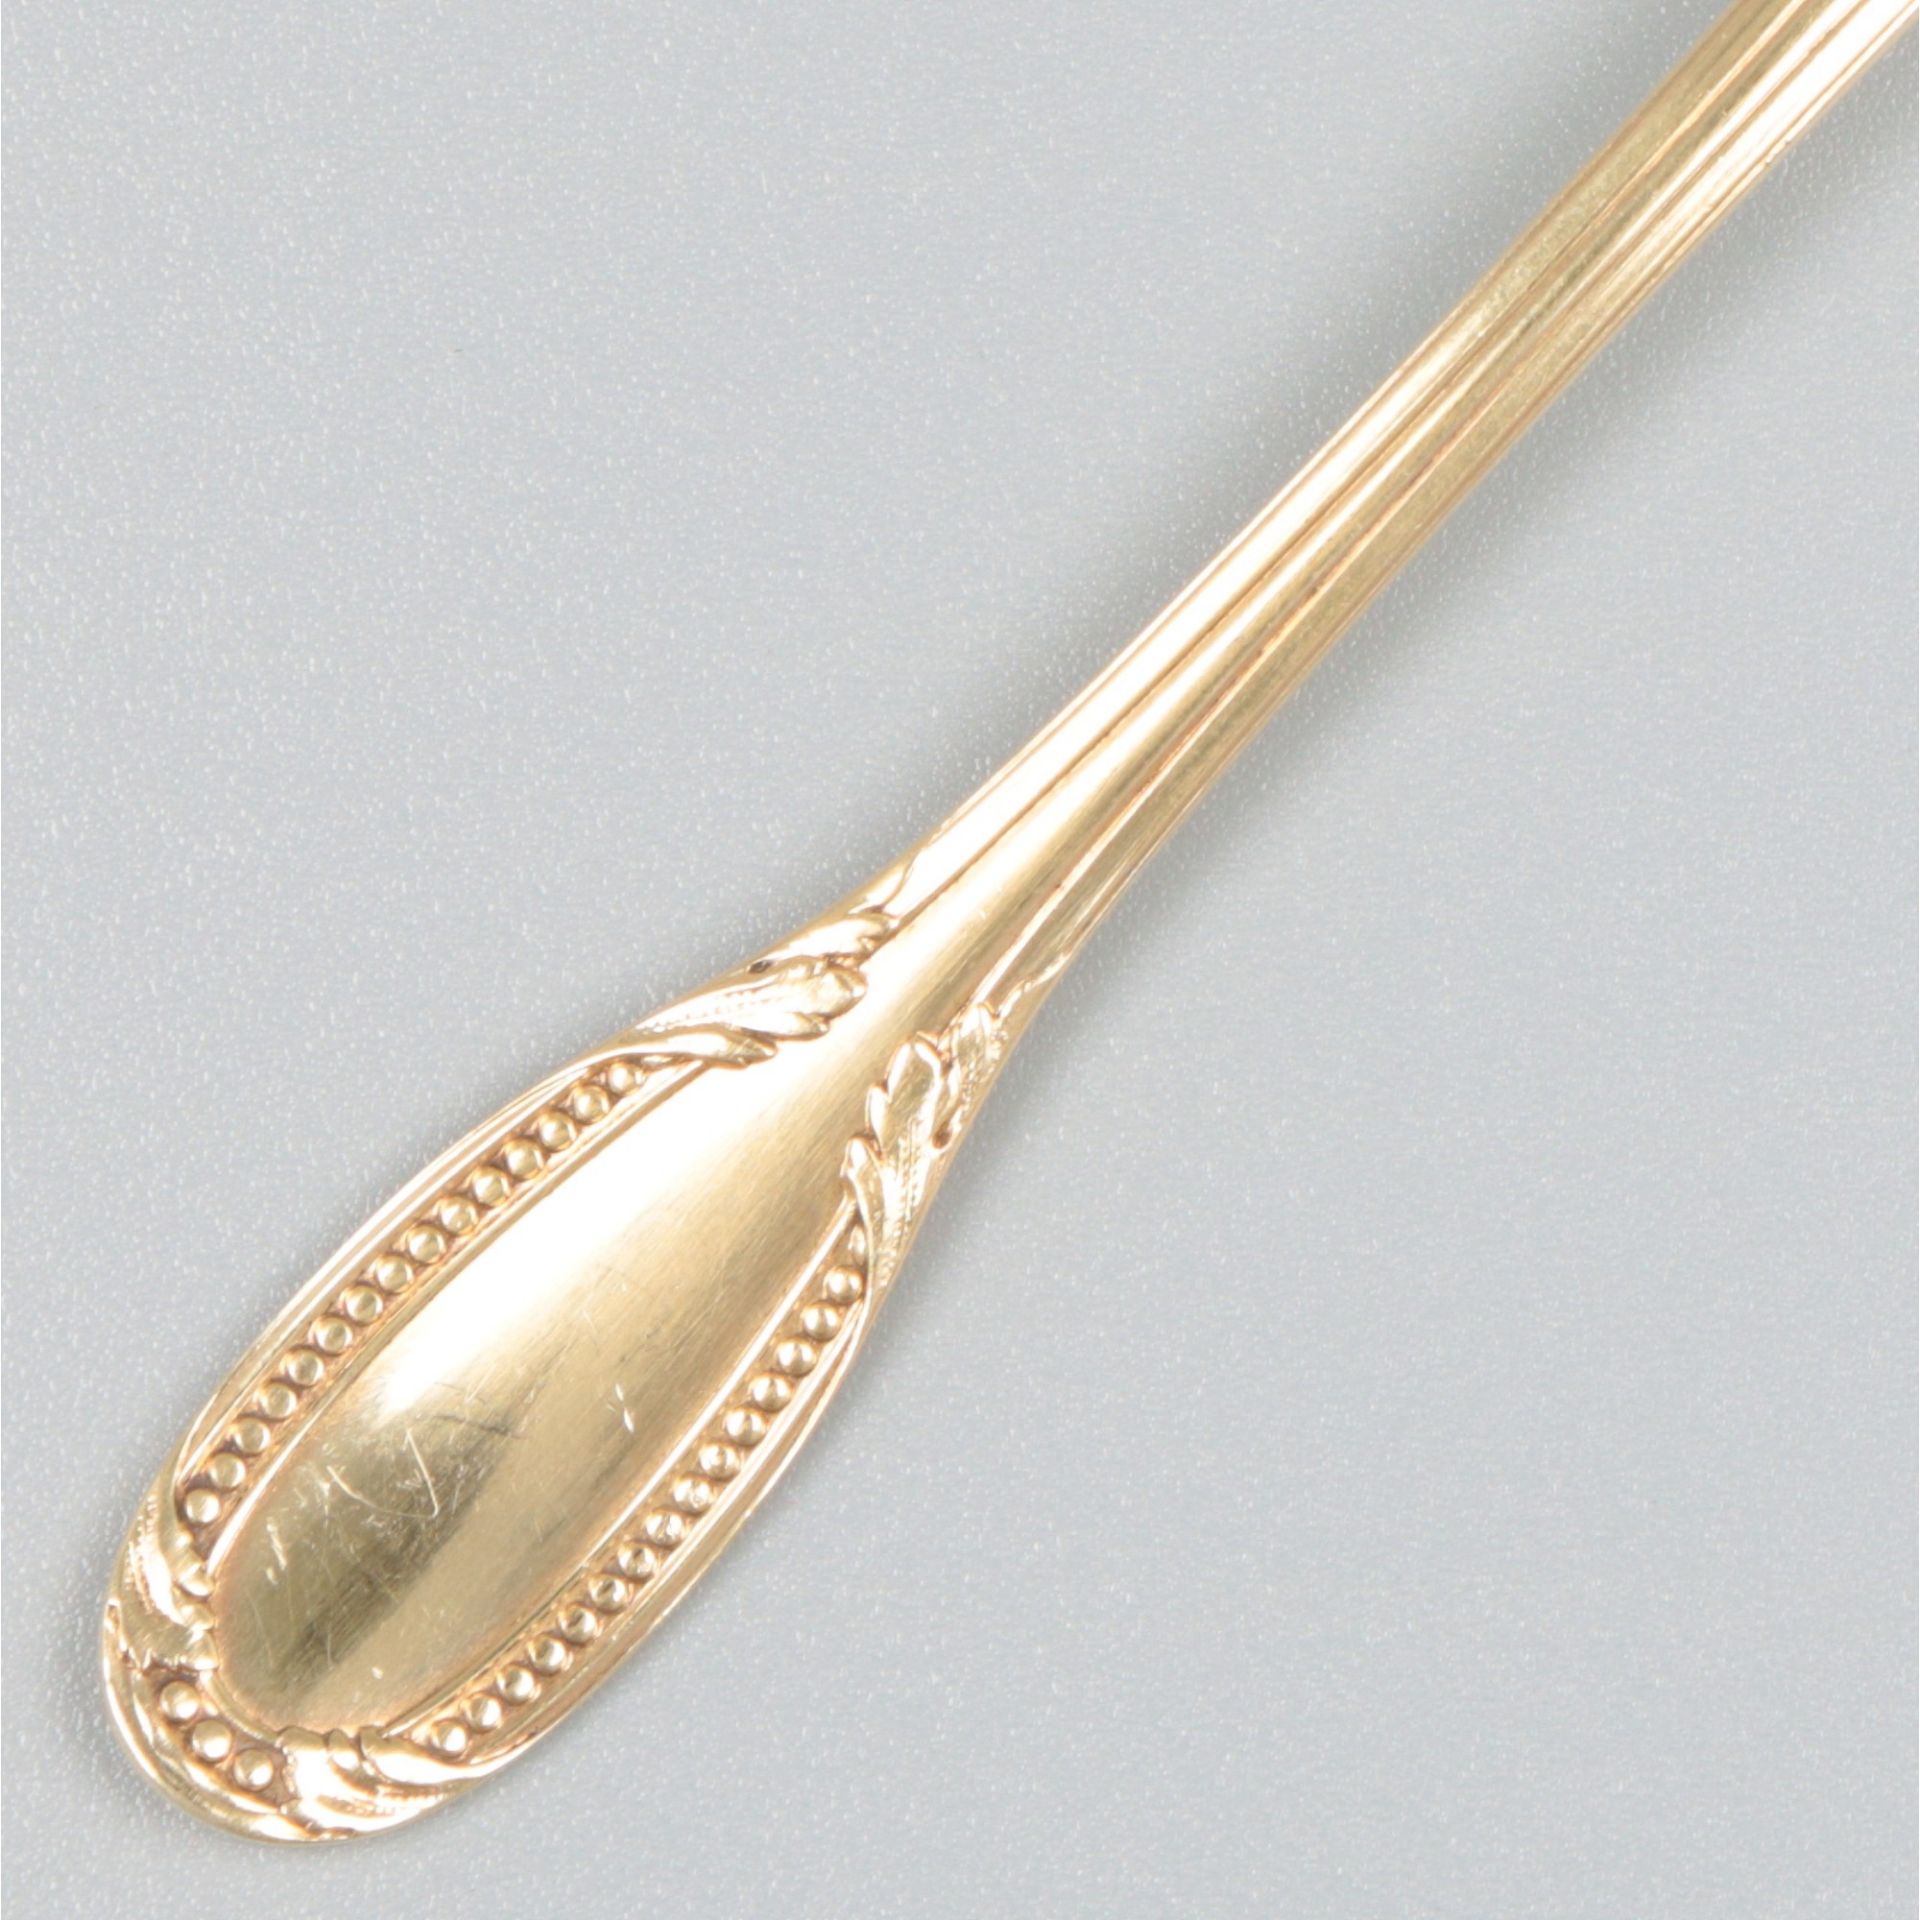 12-piece silver teaspoon set. - Image 4 of 6